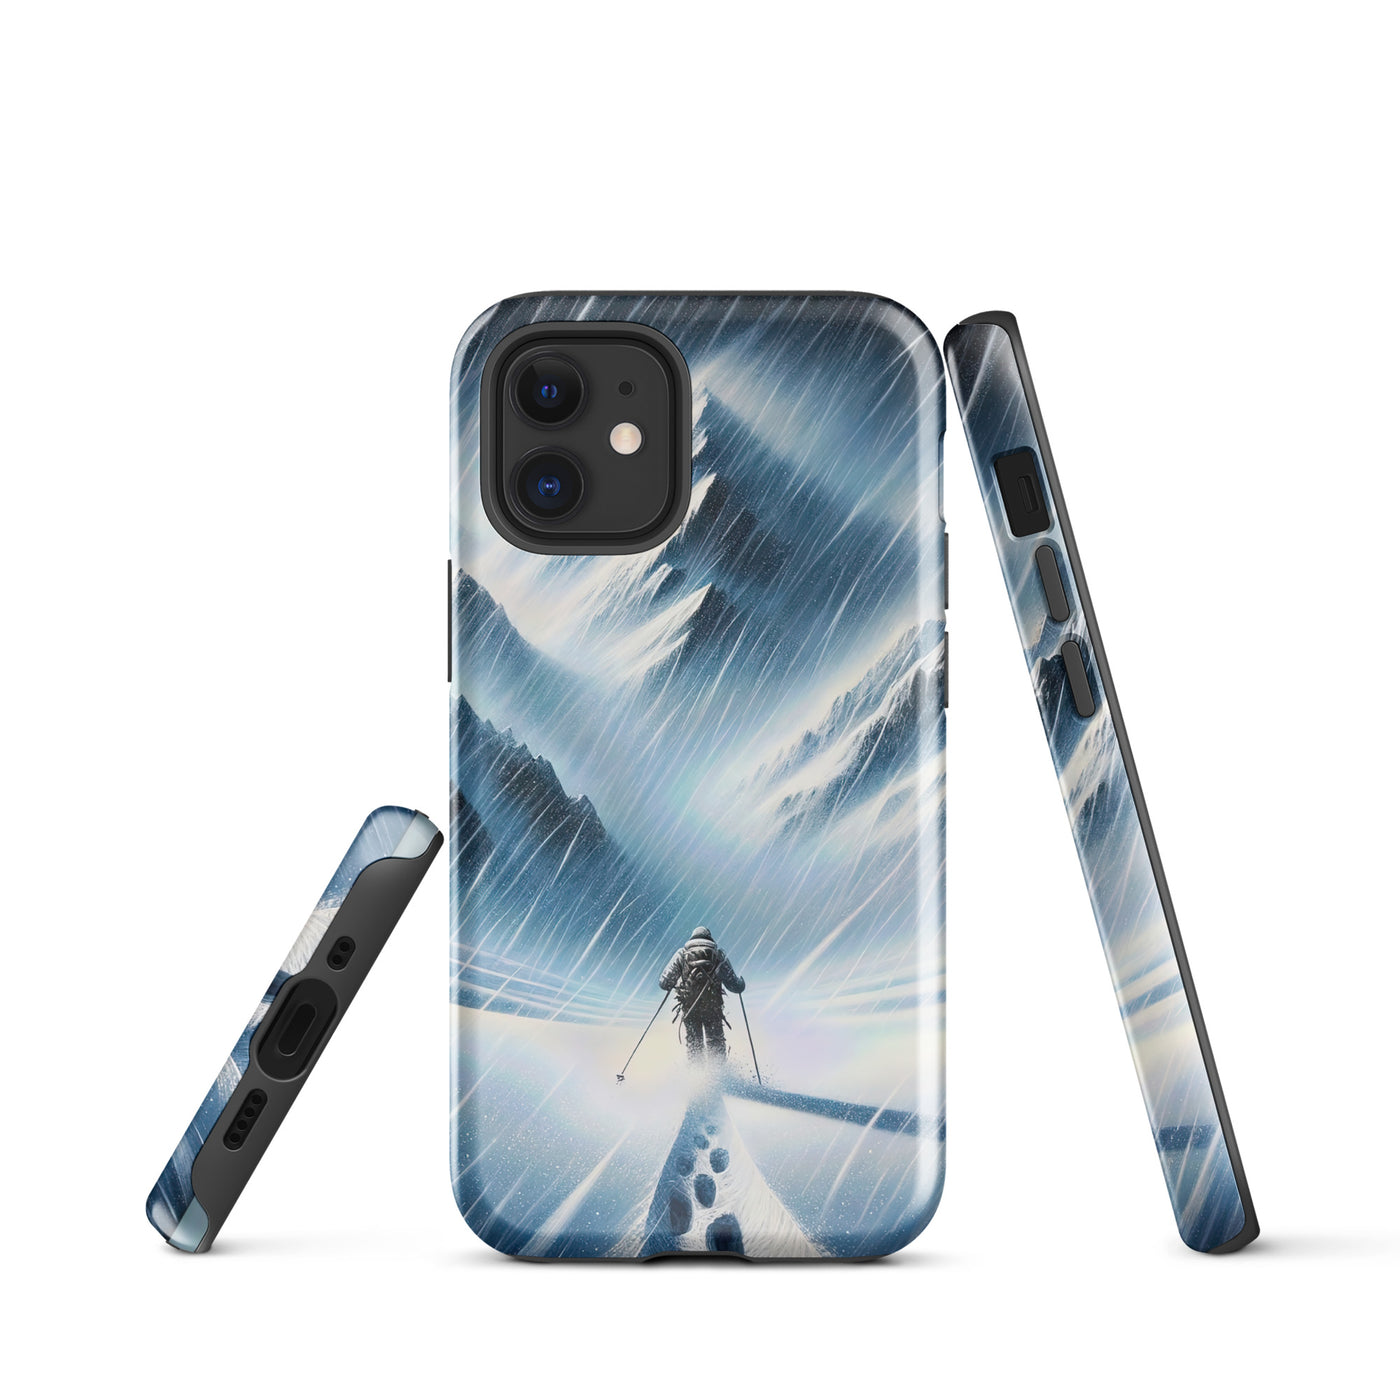 Wanderer und Bergsteiger im Schneesturm: Acrylgemälde der Alpen - iPhone Schutzhülle (robust) wandern xxx yyy zzz iPhone 12 mini